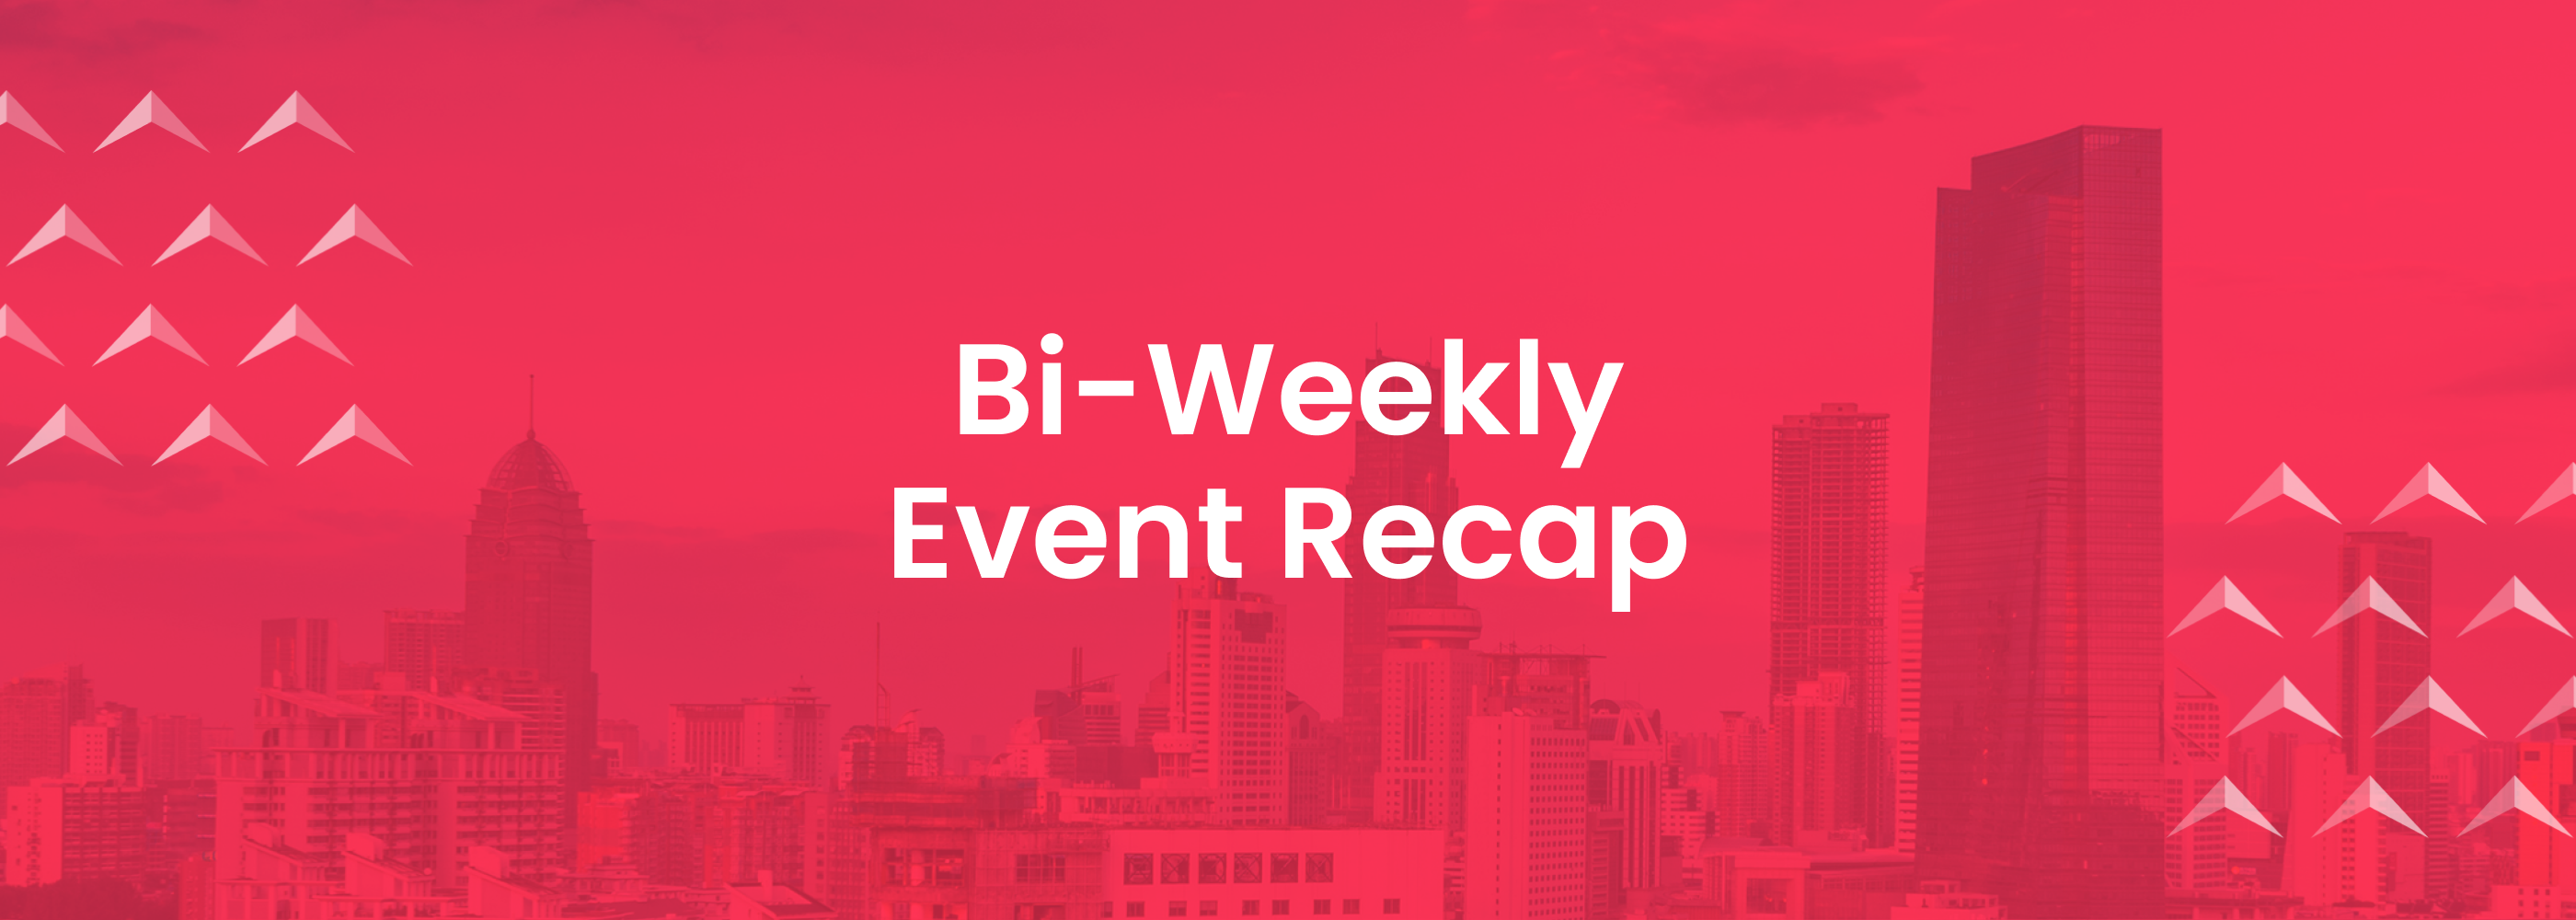 Bi-Weekly Recap: Event Highlights from September 16-30, 2021